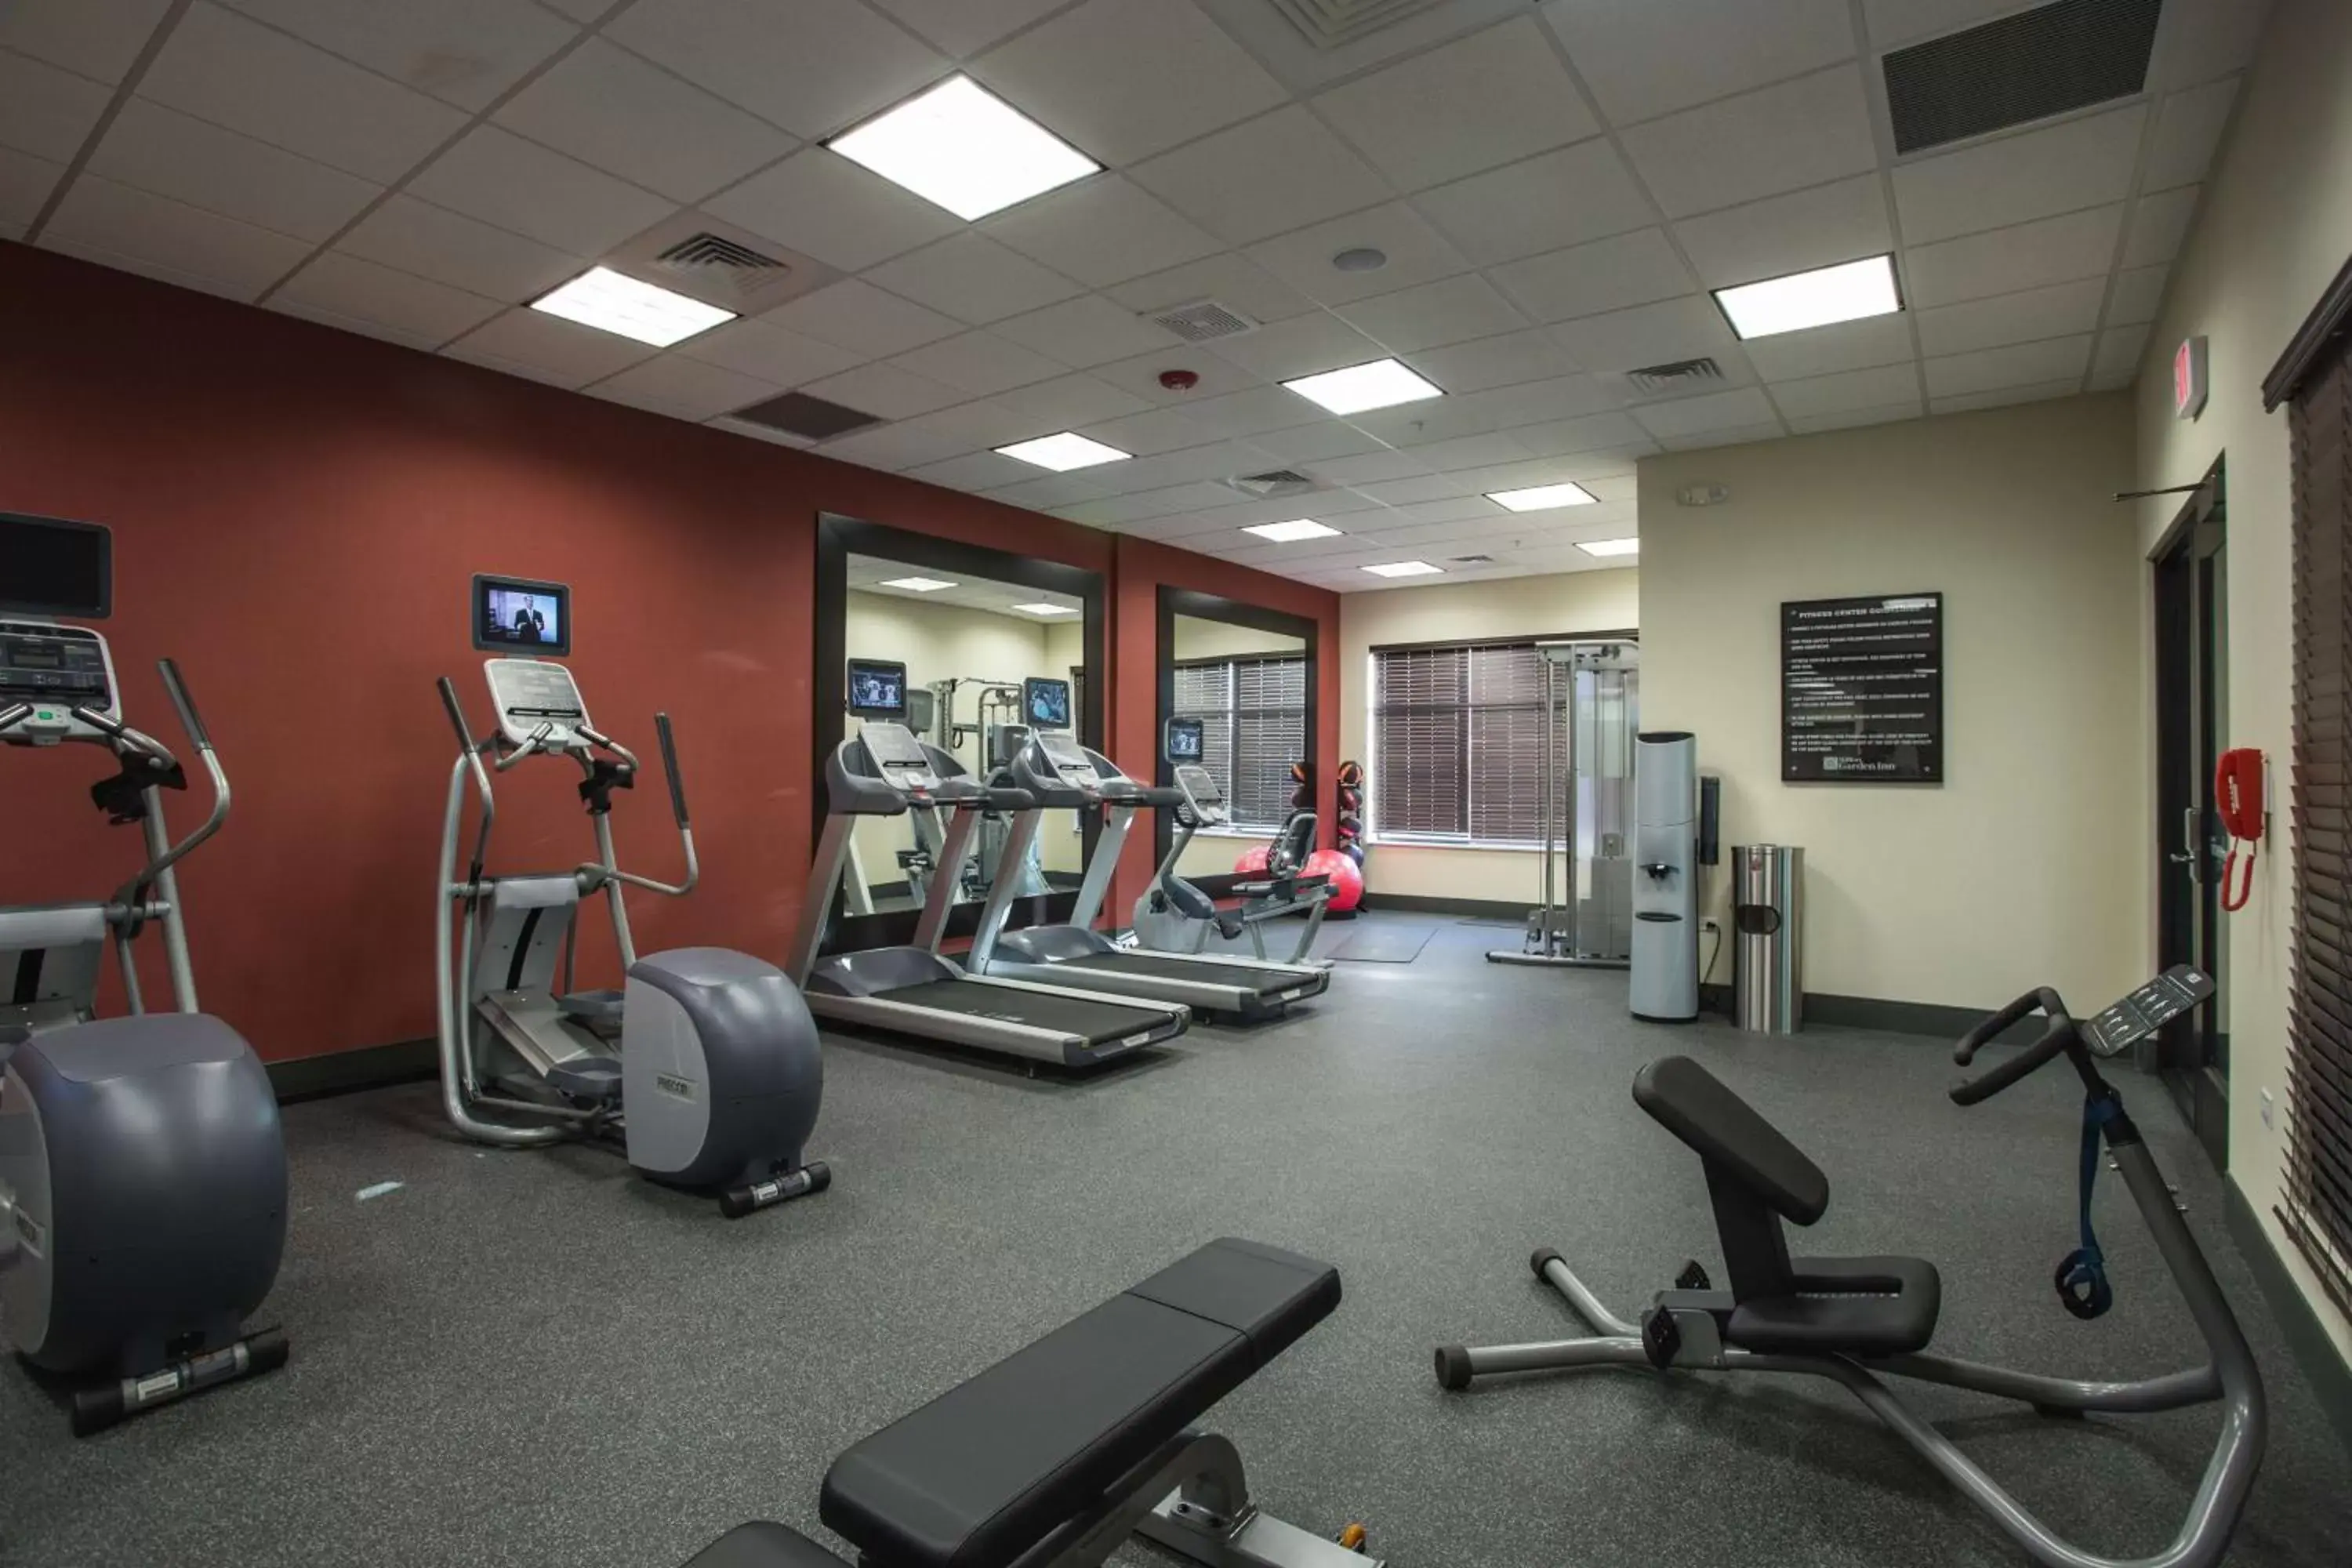 Fitness centre/facilities, Fitness Center/Facilities in Hilton Garden Inn Bolingbrook I-55